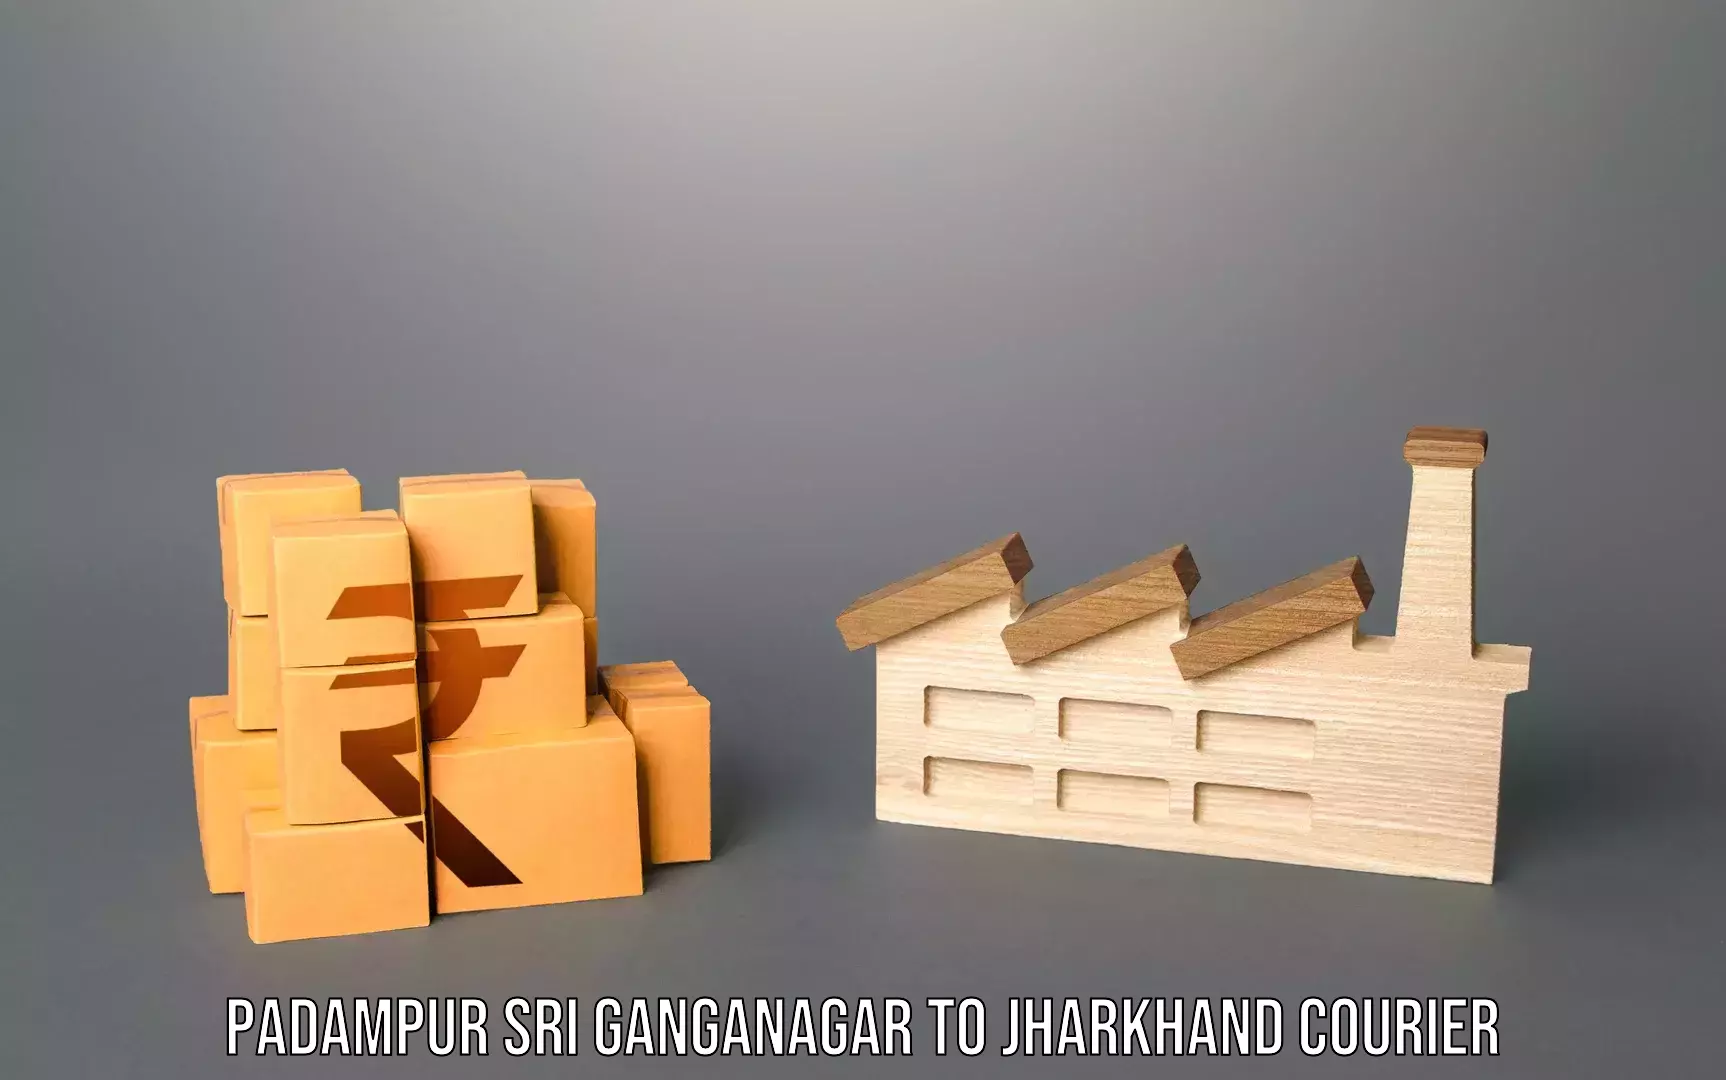 Baggage shipping service Padampur Sri Ganganagar to Bokaro Steel City